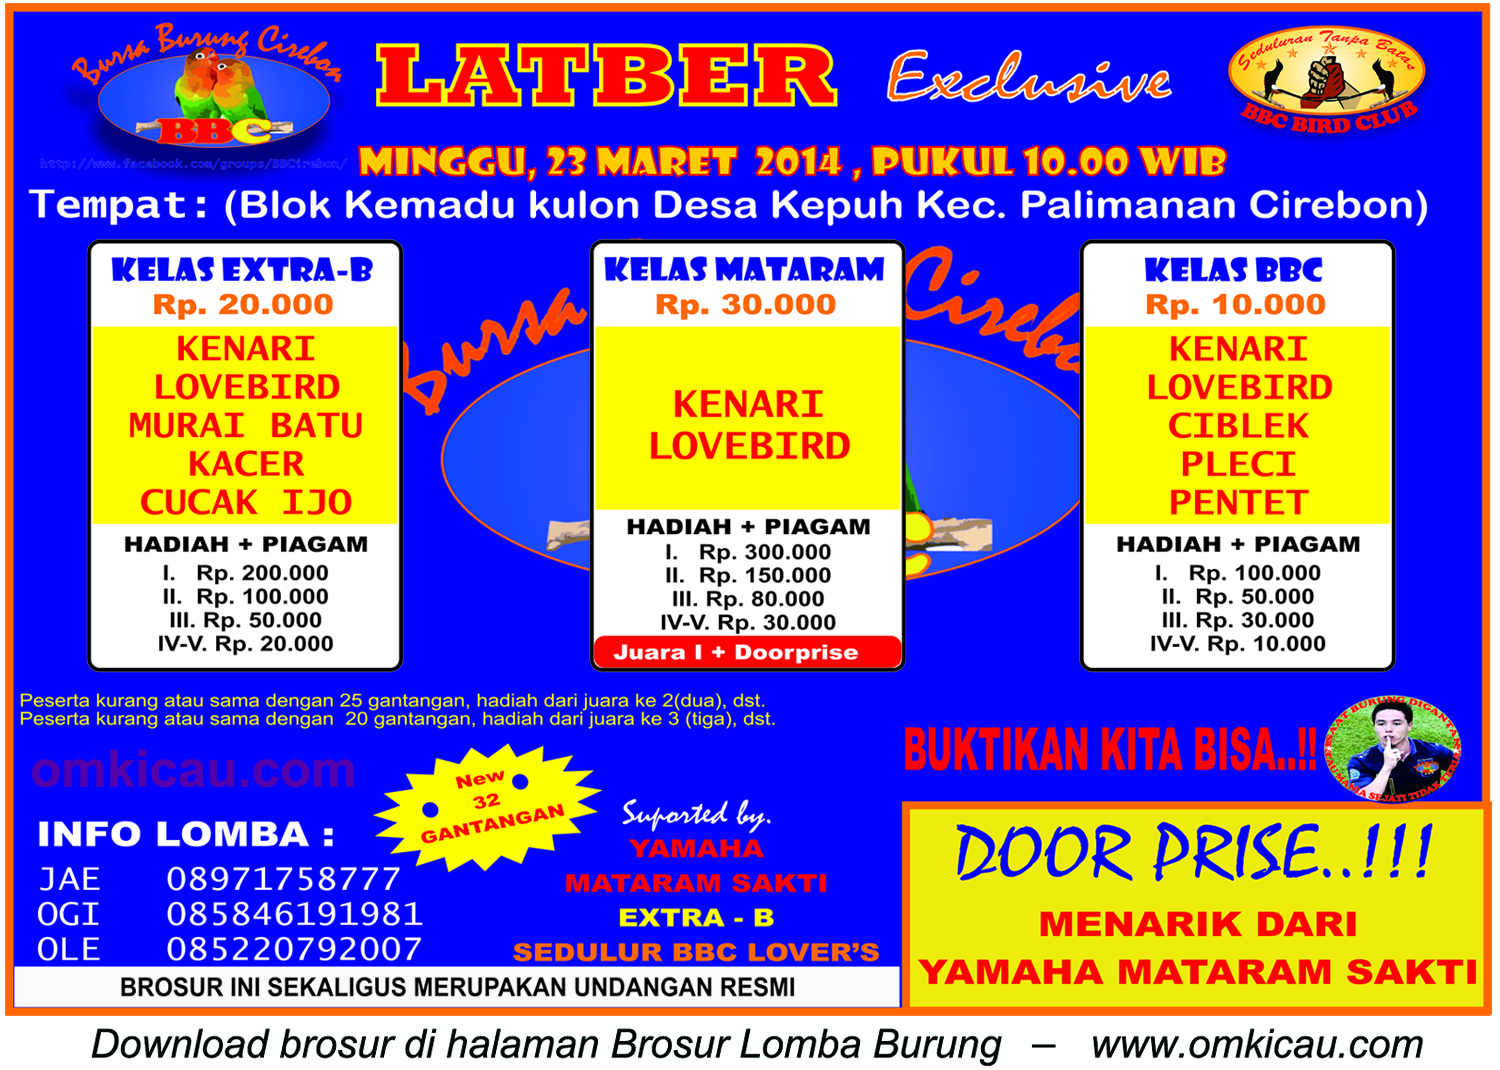 Brosur Latber Exclusive BBC, Cirebon, 23 Maret 2014